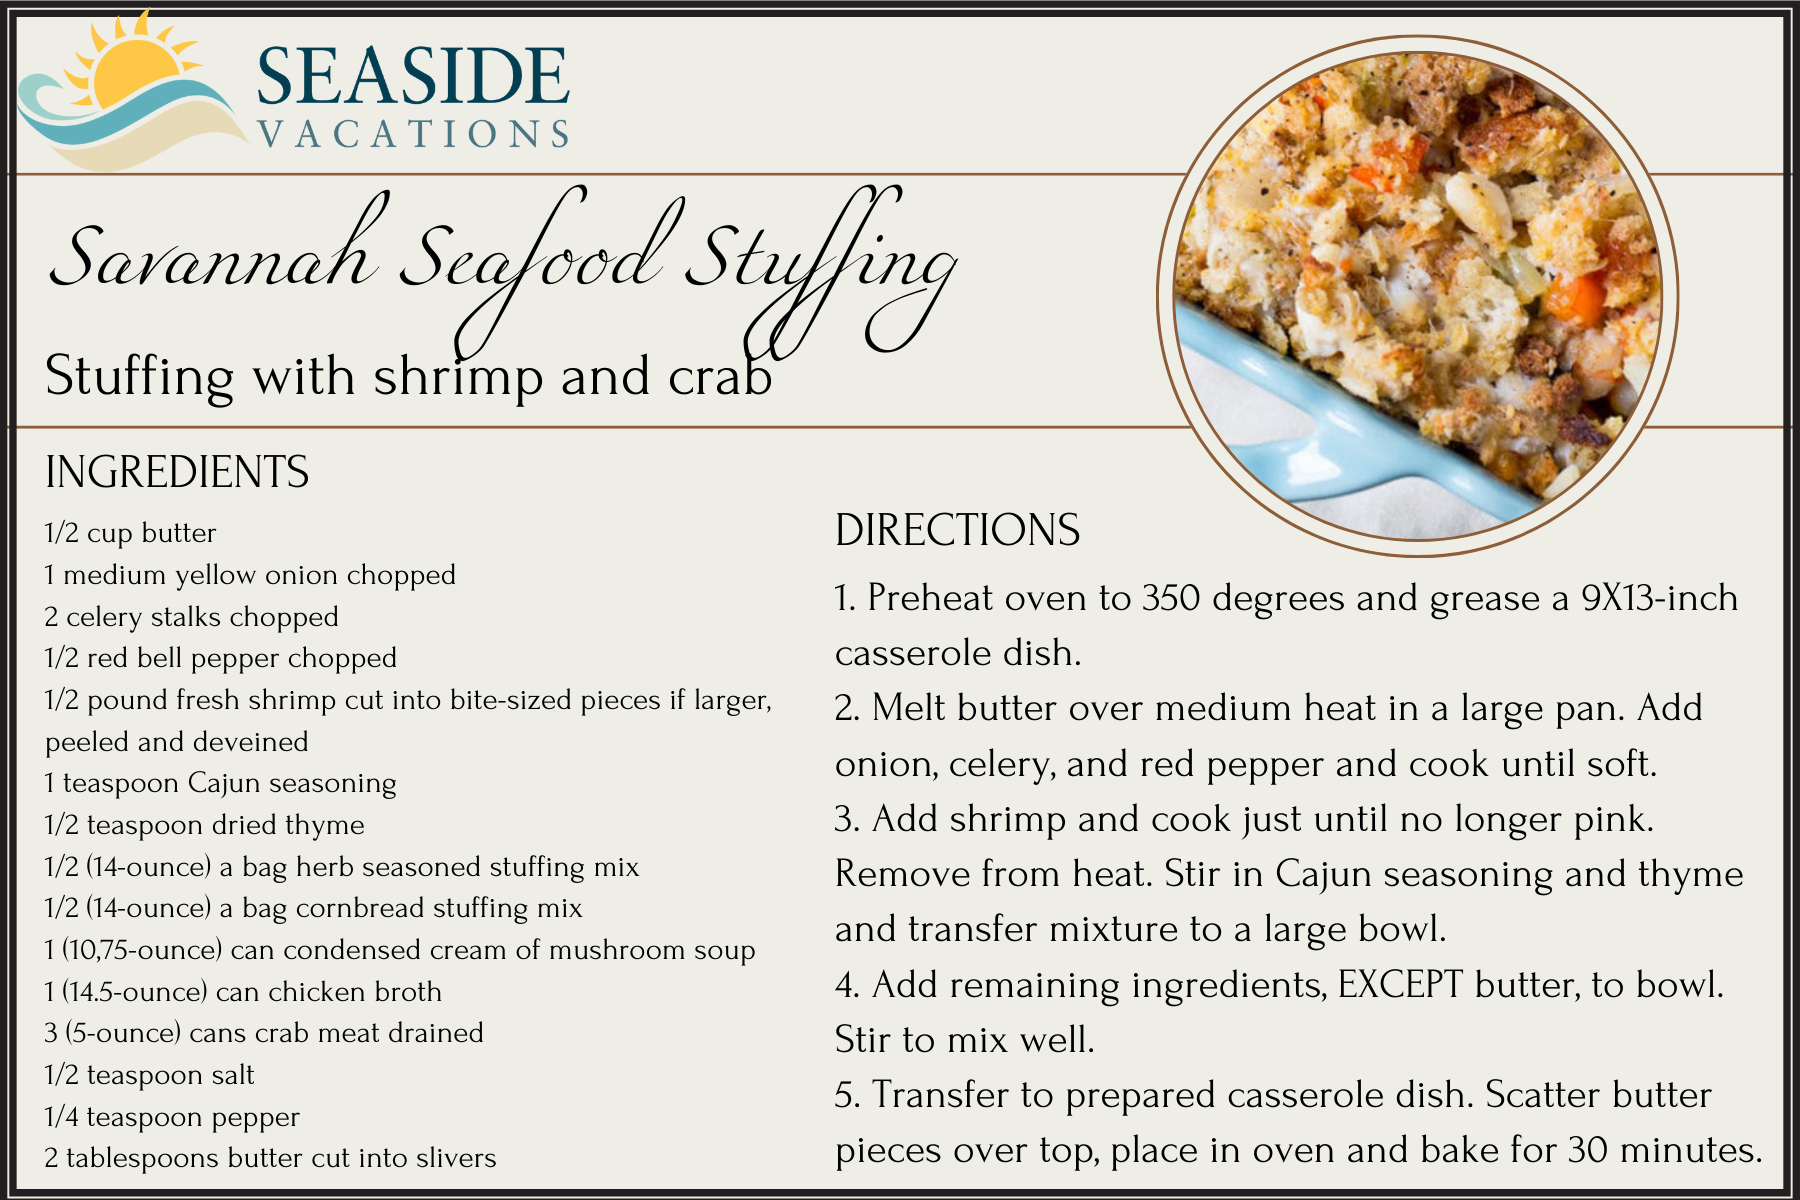 Savannah Seafood Stuffing Recipe Card